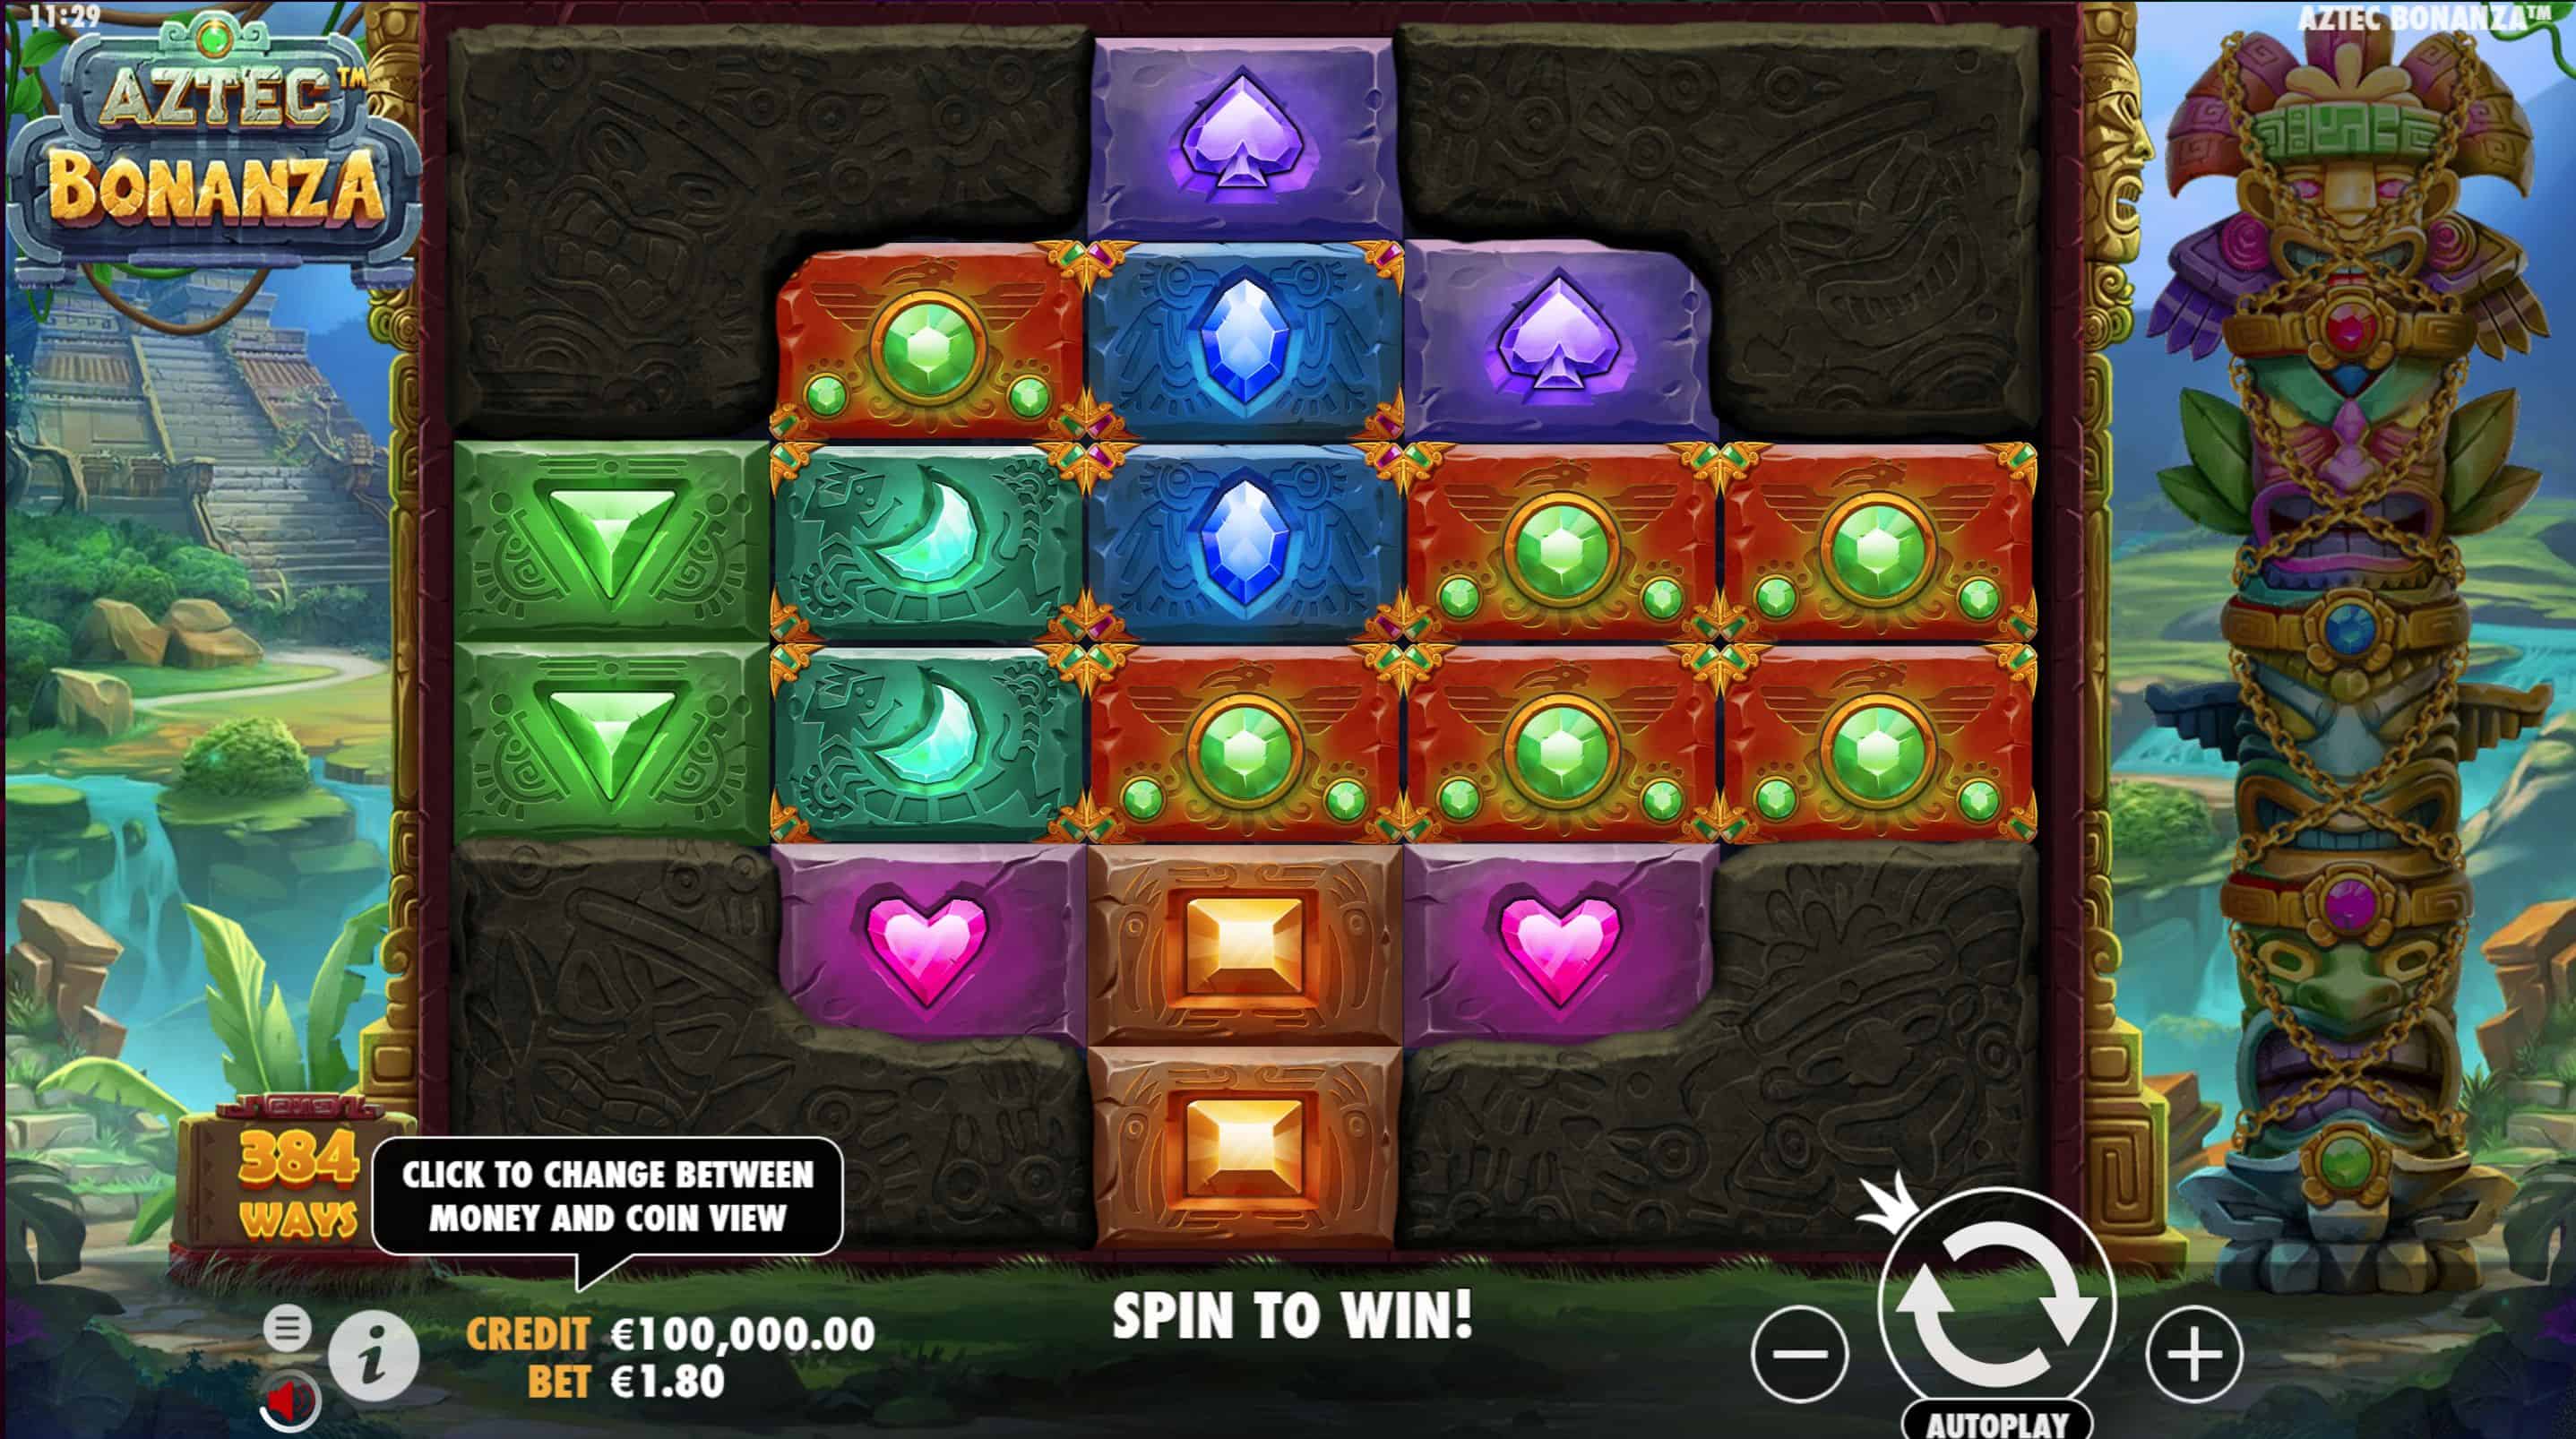 Aztec Bonanza Slot Game Free Play at Casino Ireland 01